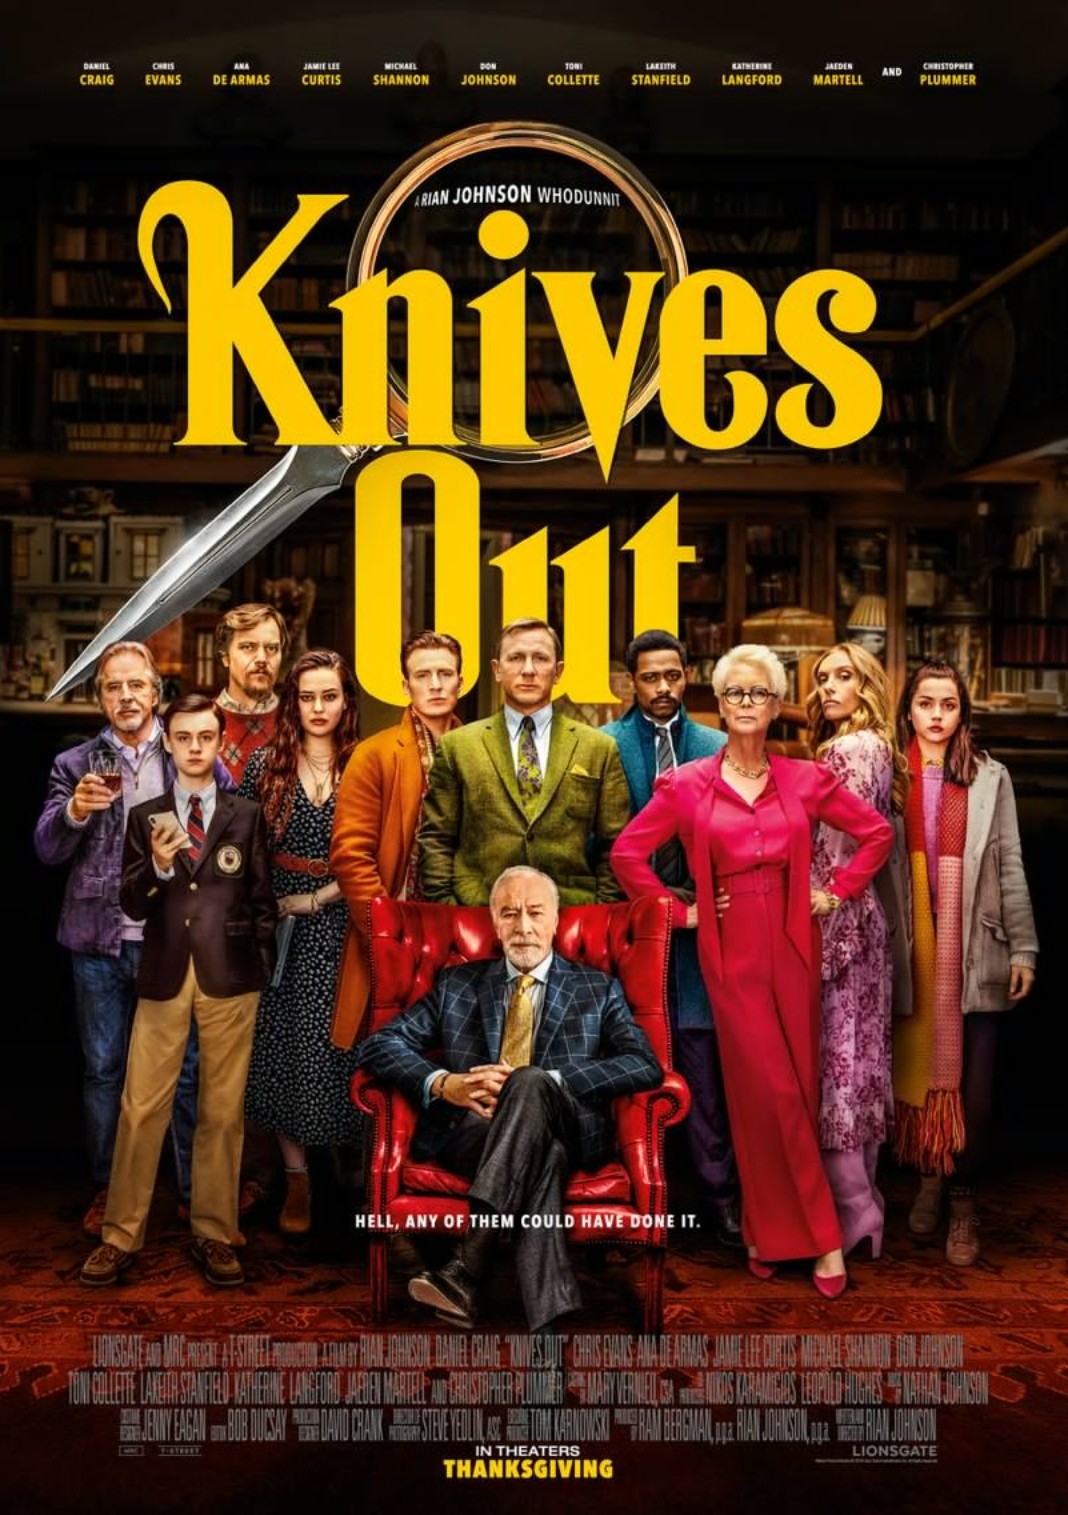 Knives Out (2019) Full Movie Free Online Seth Rogen, Charlize Theron, Andy Serkis, June Diane Raphael, Ravi Patel, Bob Odenkirk, Alexander Skarsgård